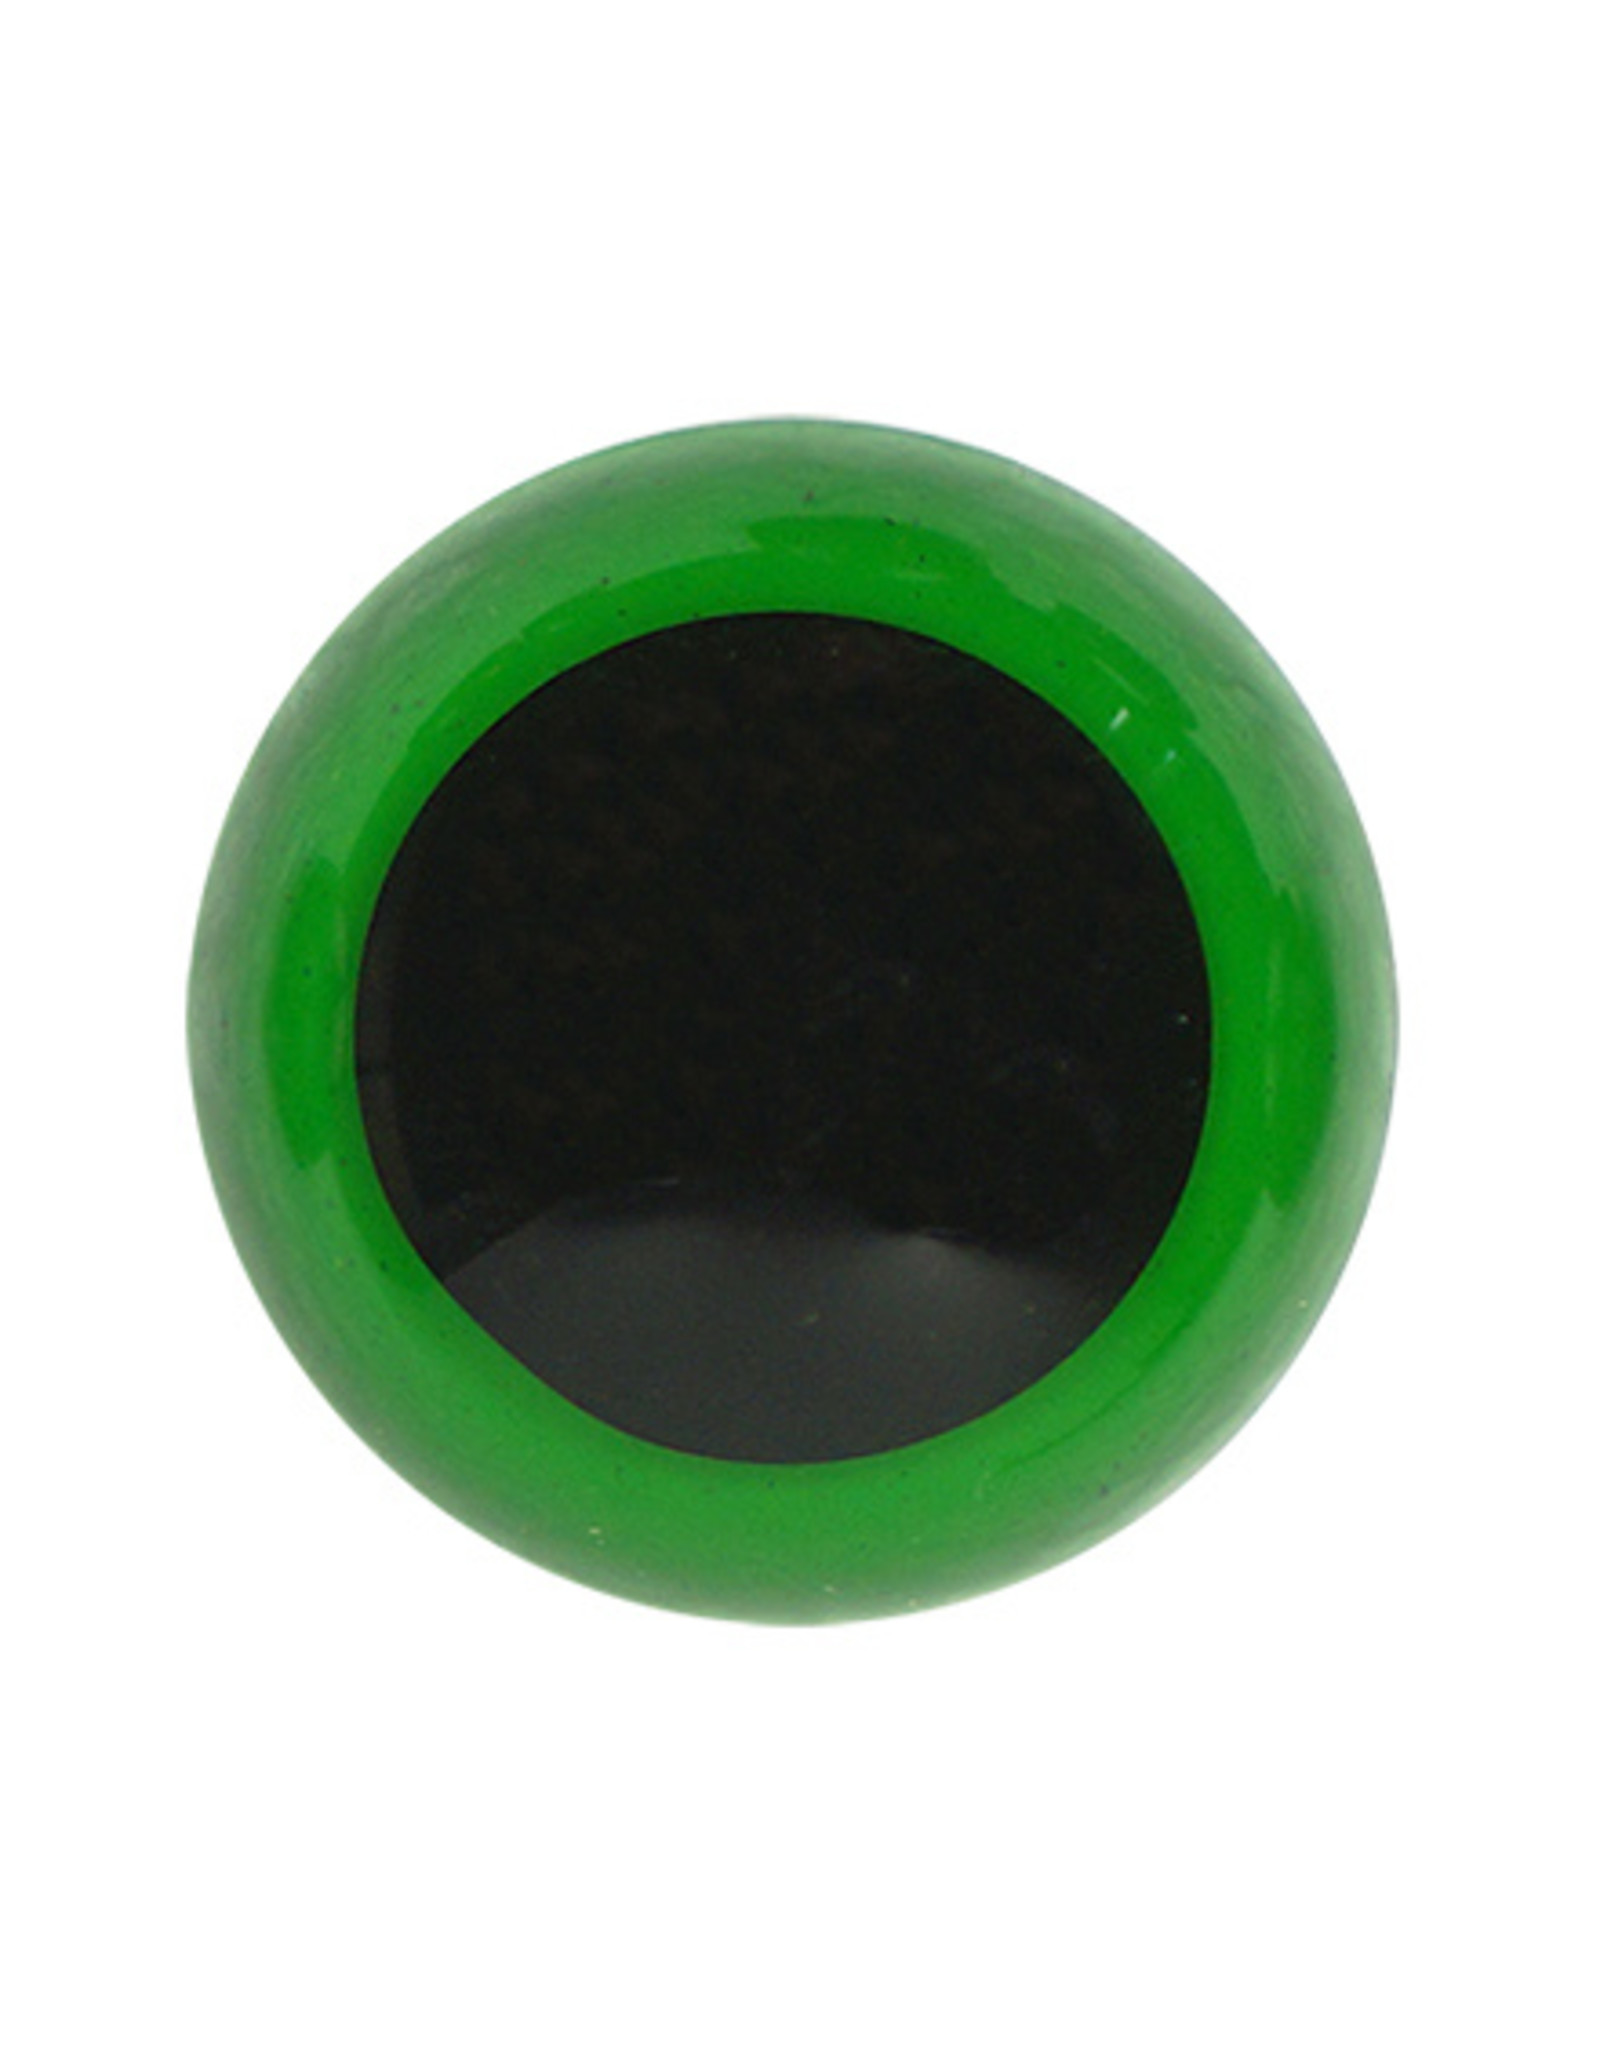 Veiligheidsogen zwart met groene rand 10mm 10st.